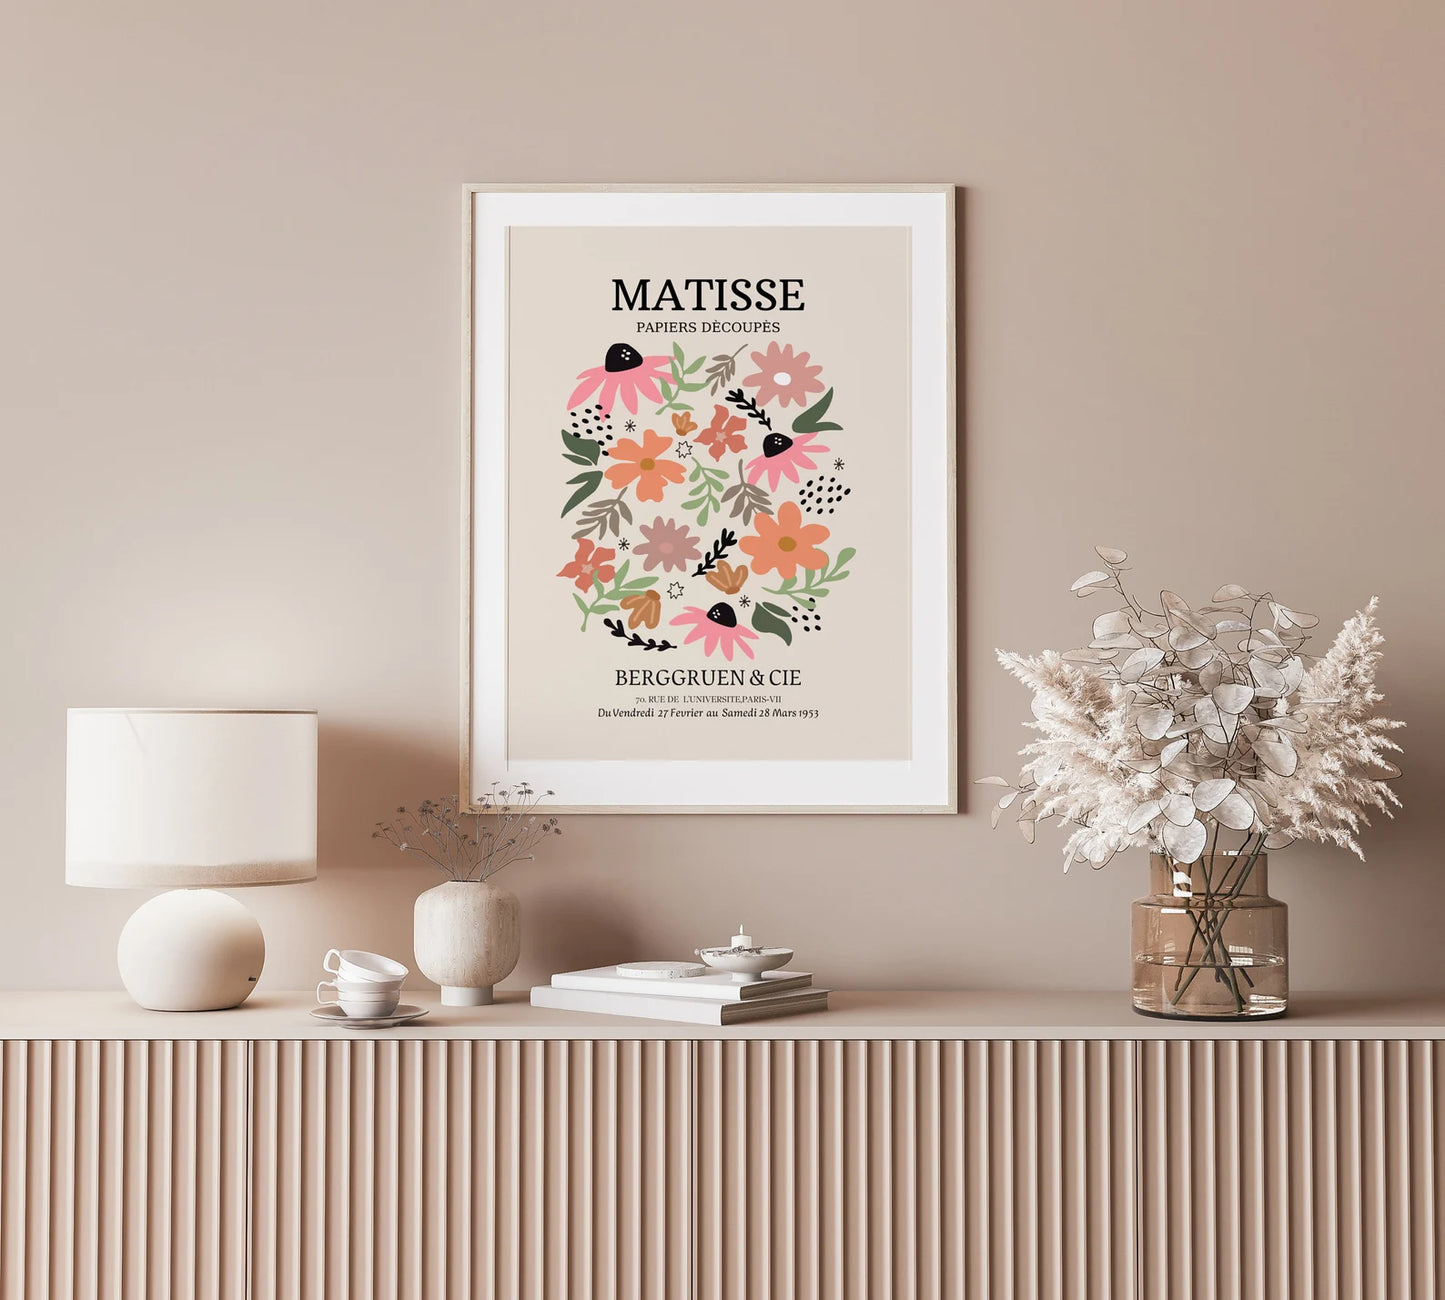 Matisse Cutout, Matisse Leaf, Matisse Print, Matisse Poster, Matisse Museum Print, Exhibition Poster, Abstract Art Print, Wall Art Decor